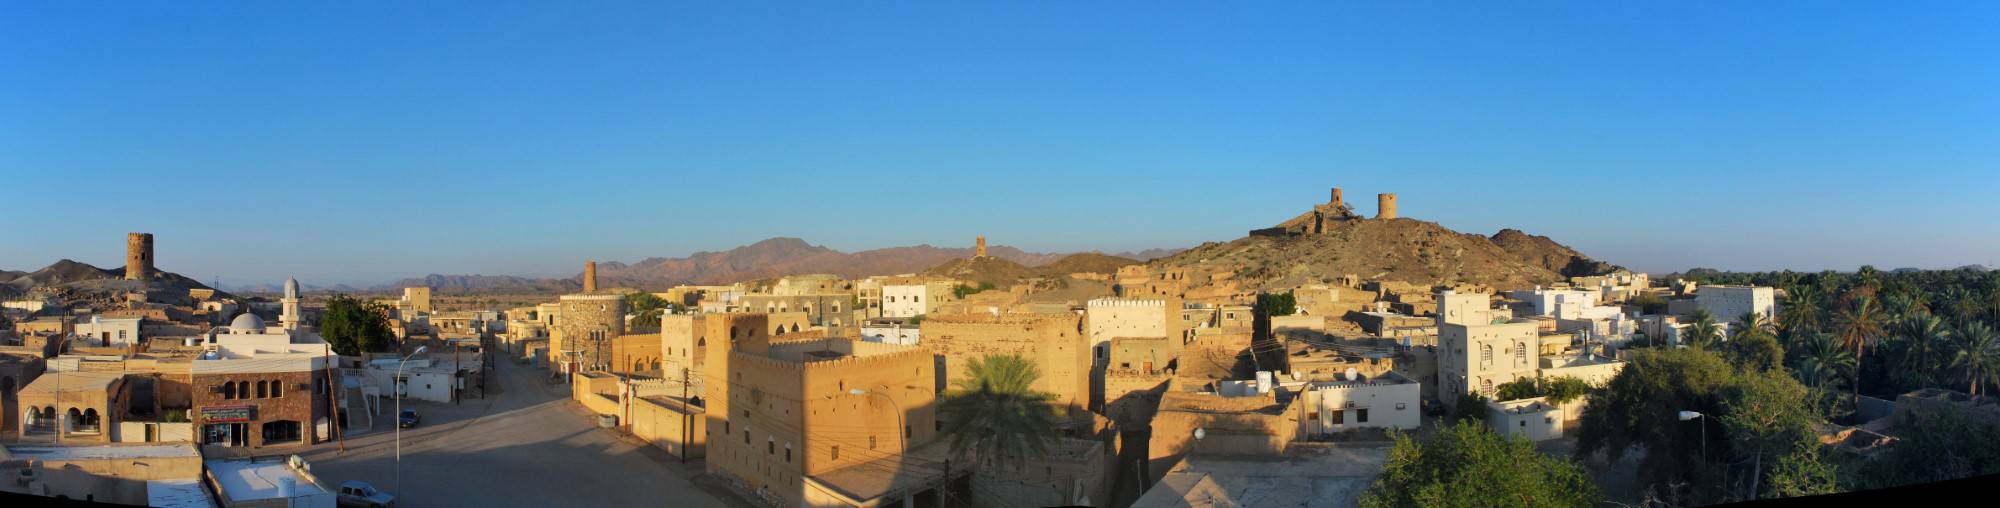 Panoramic view of Al-Mudayrib